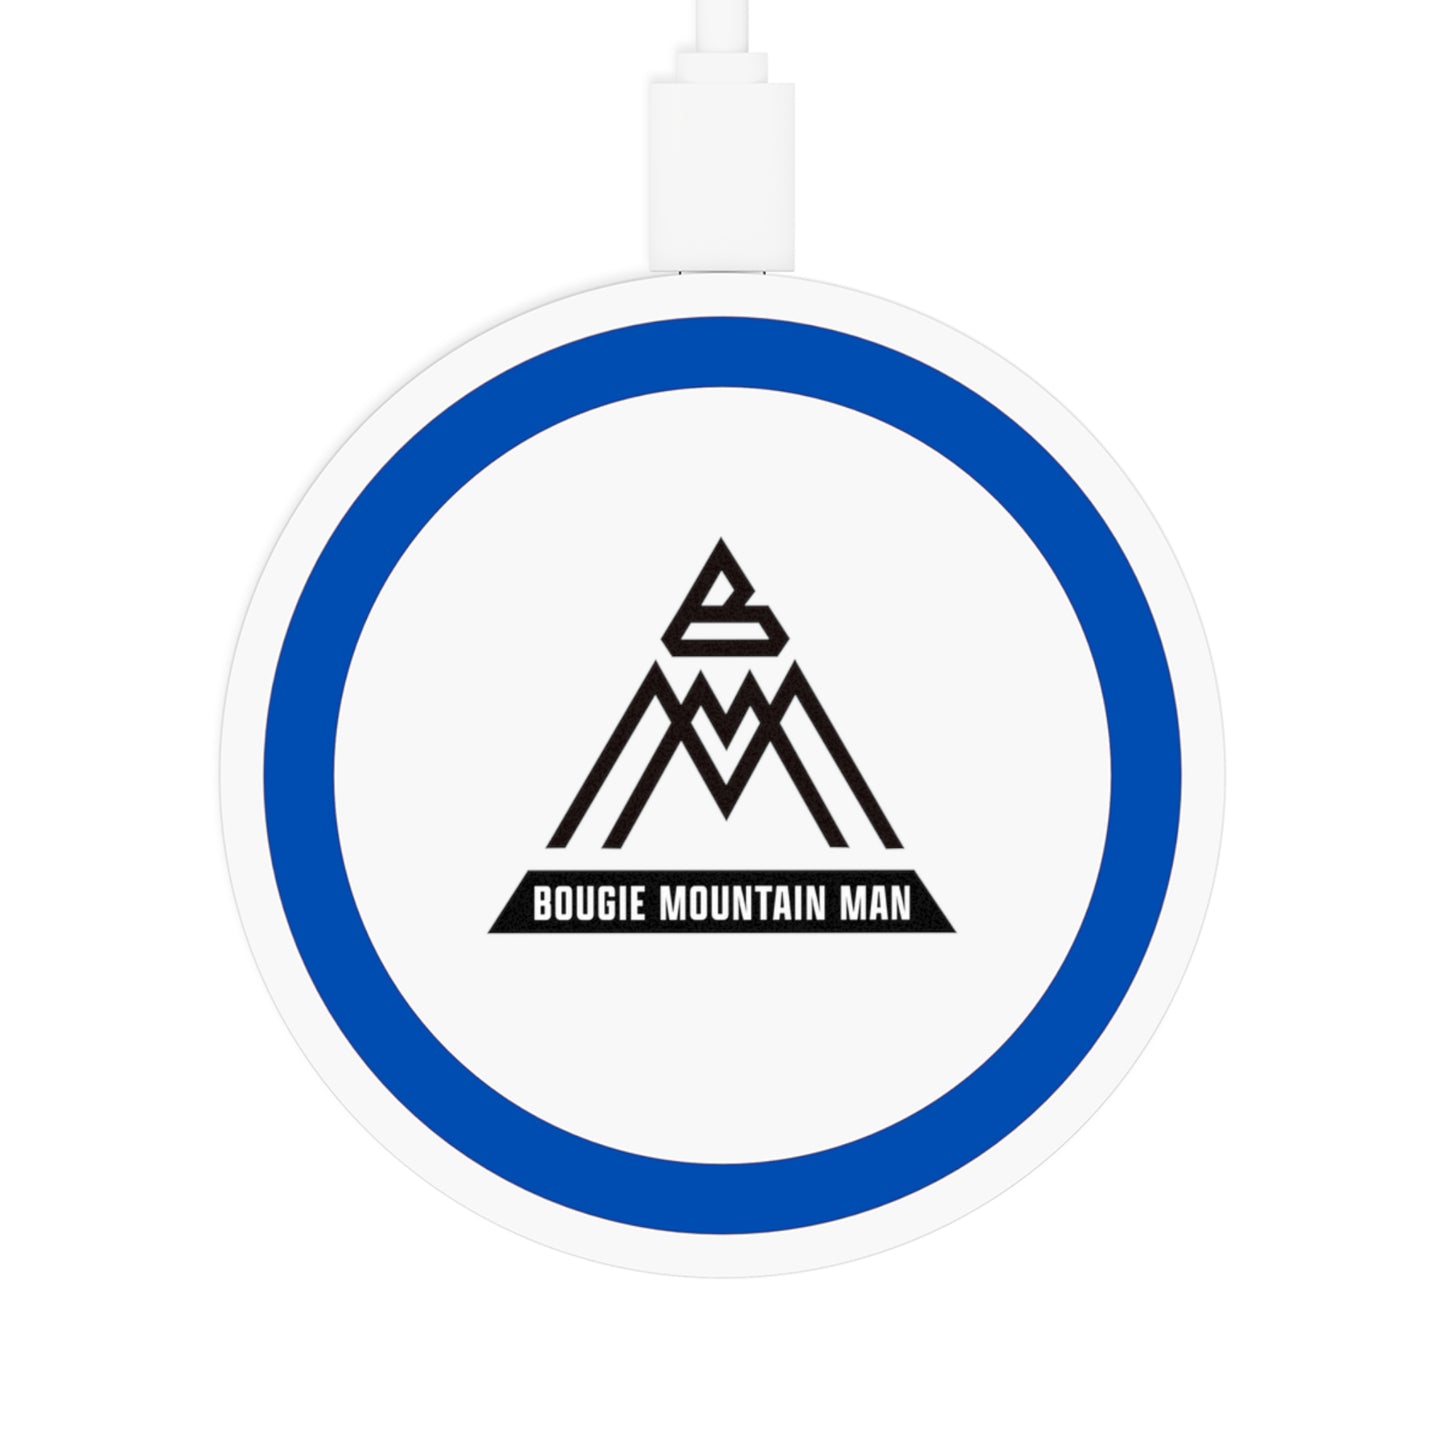 Bougie Mountain Man Wireless Charging Pad